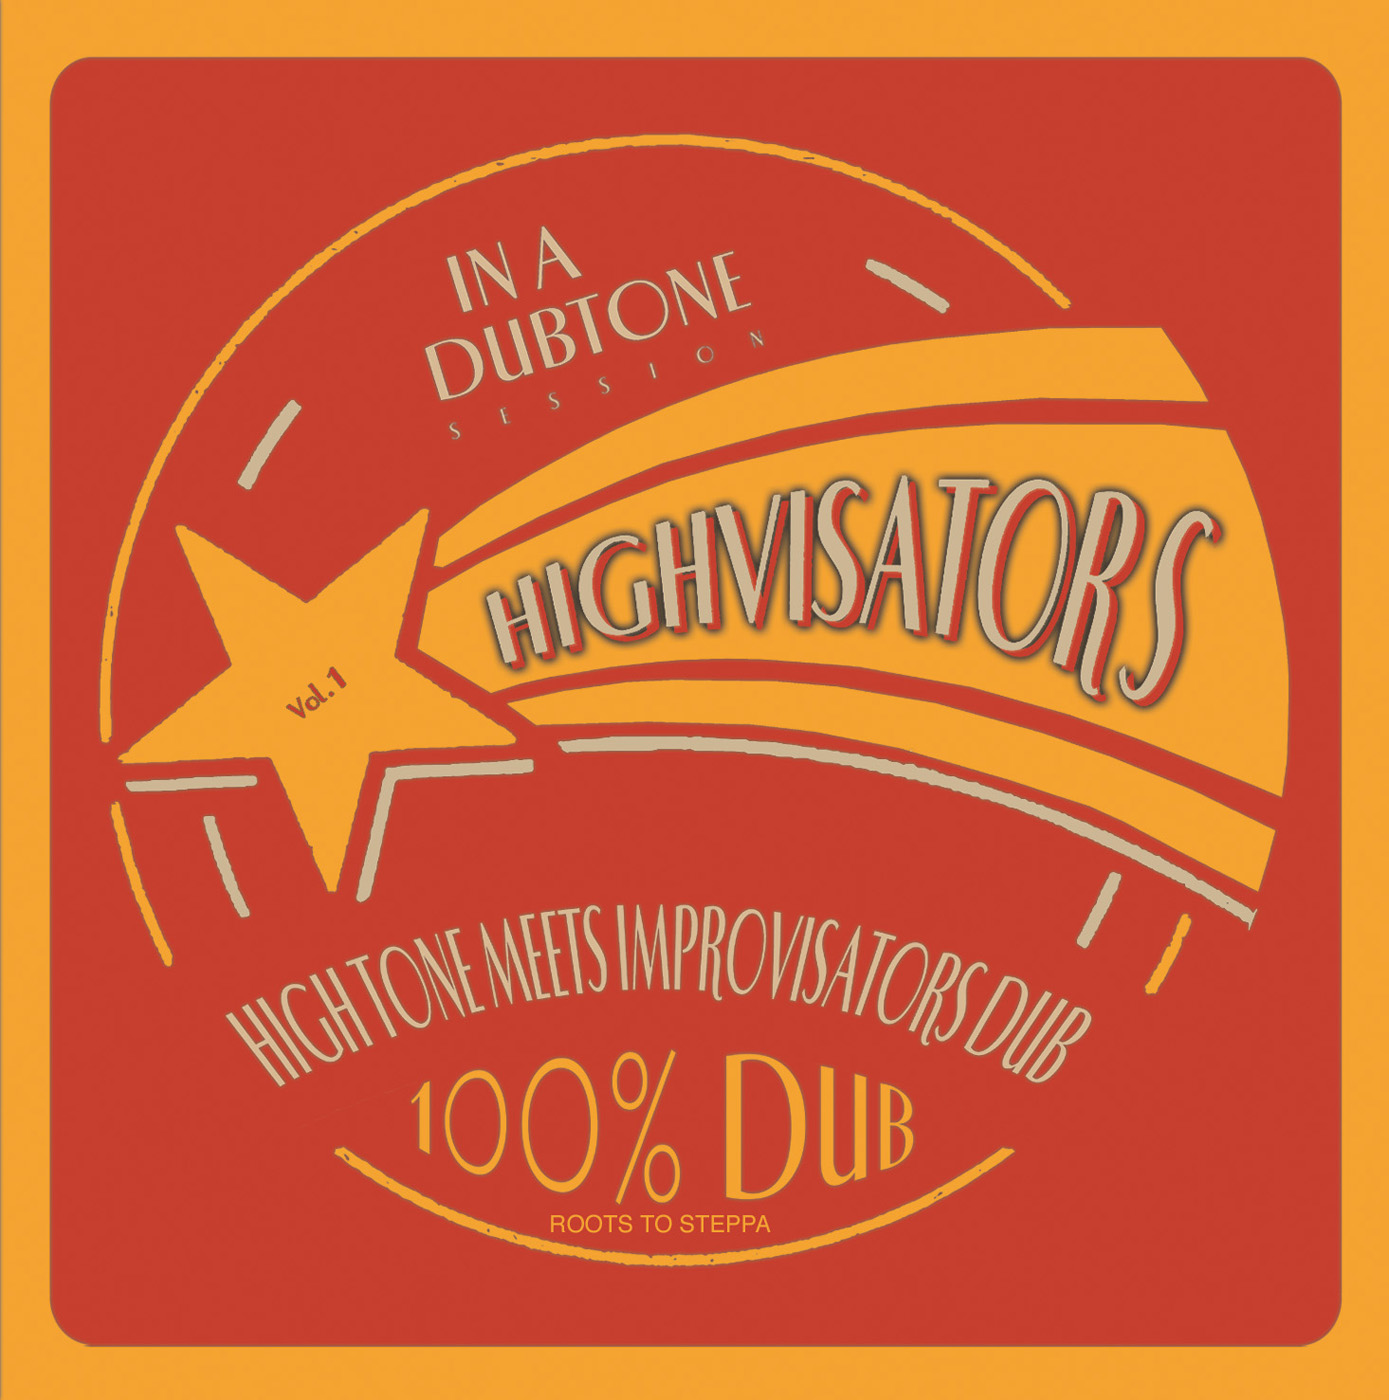 Highvisators - High Tone meets Improvisator Dub, High Tone, Jarring Effects